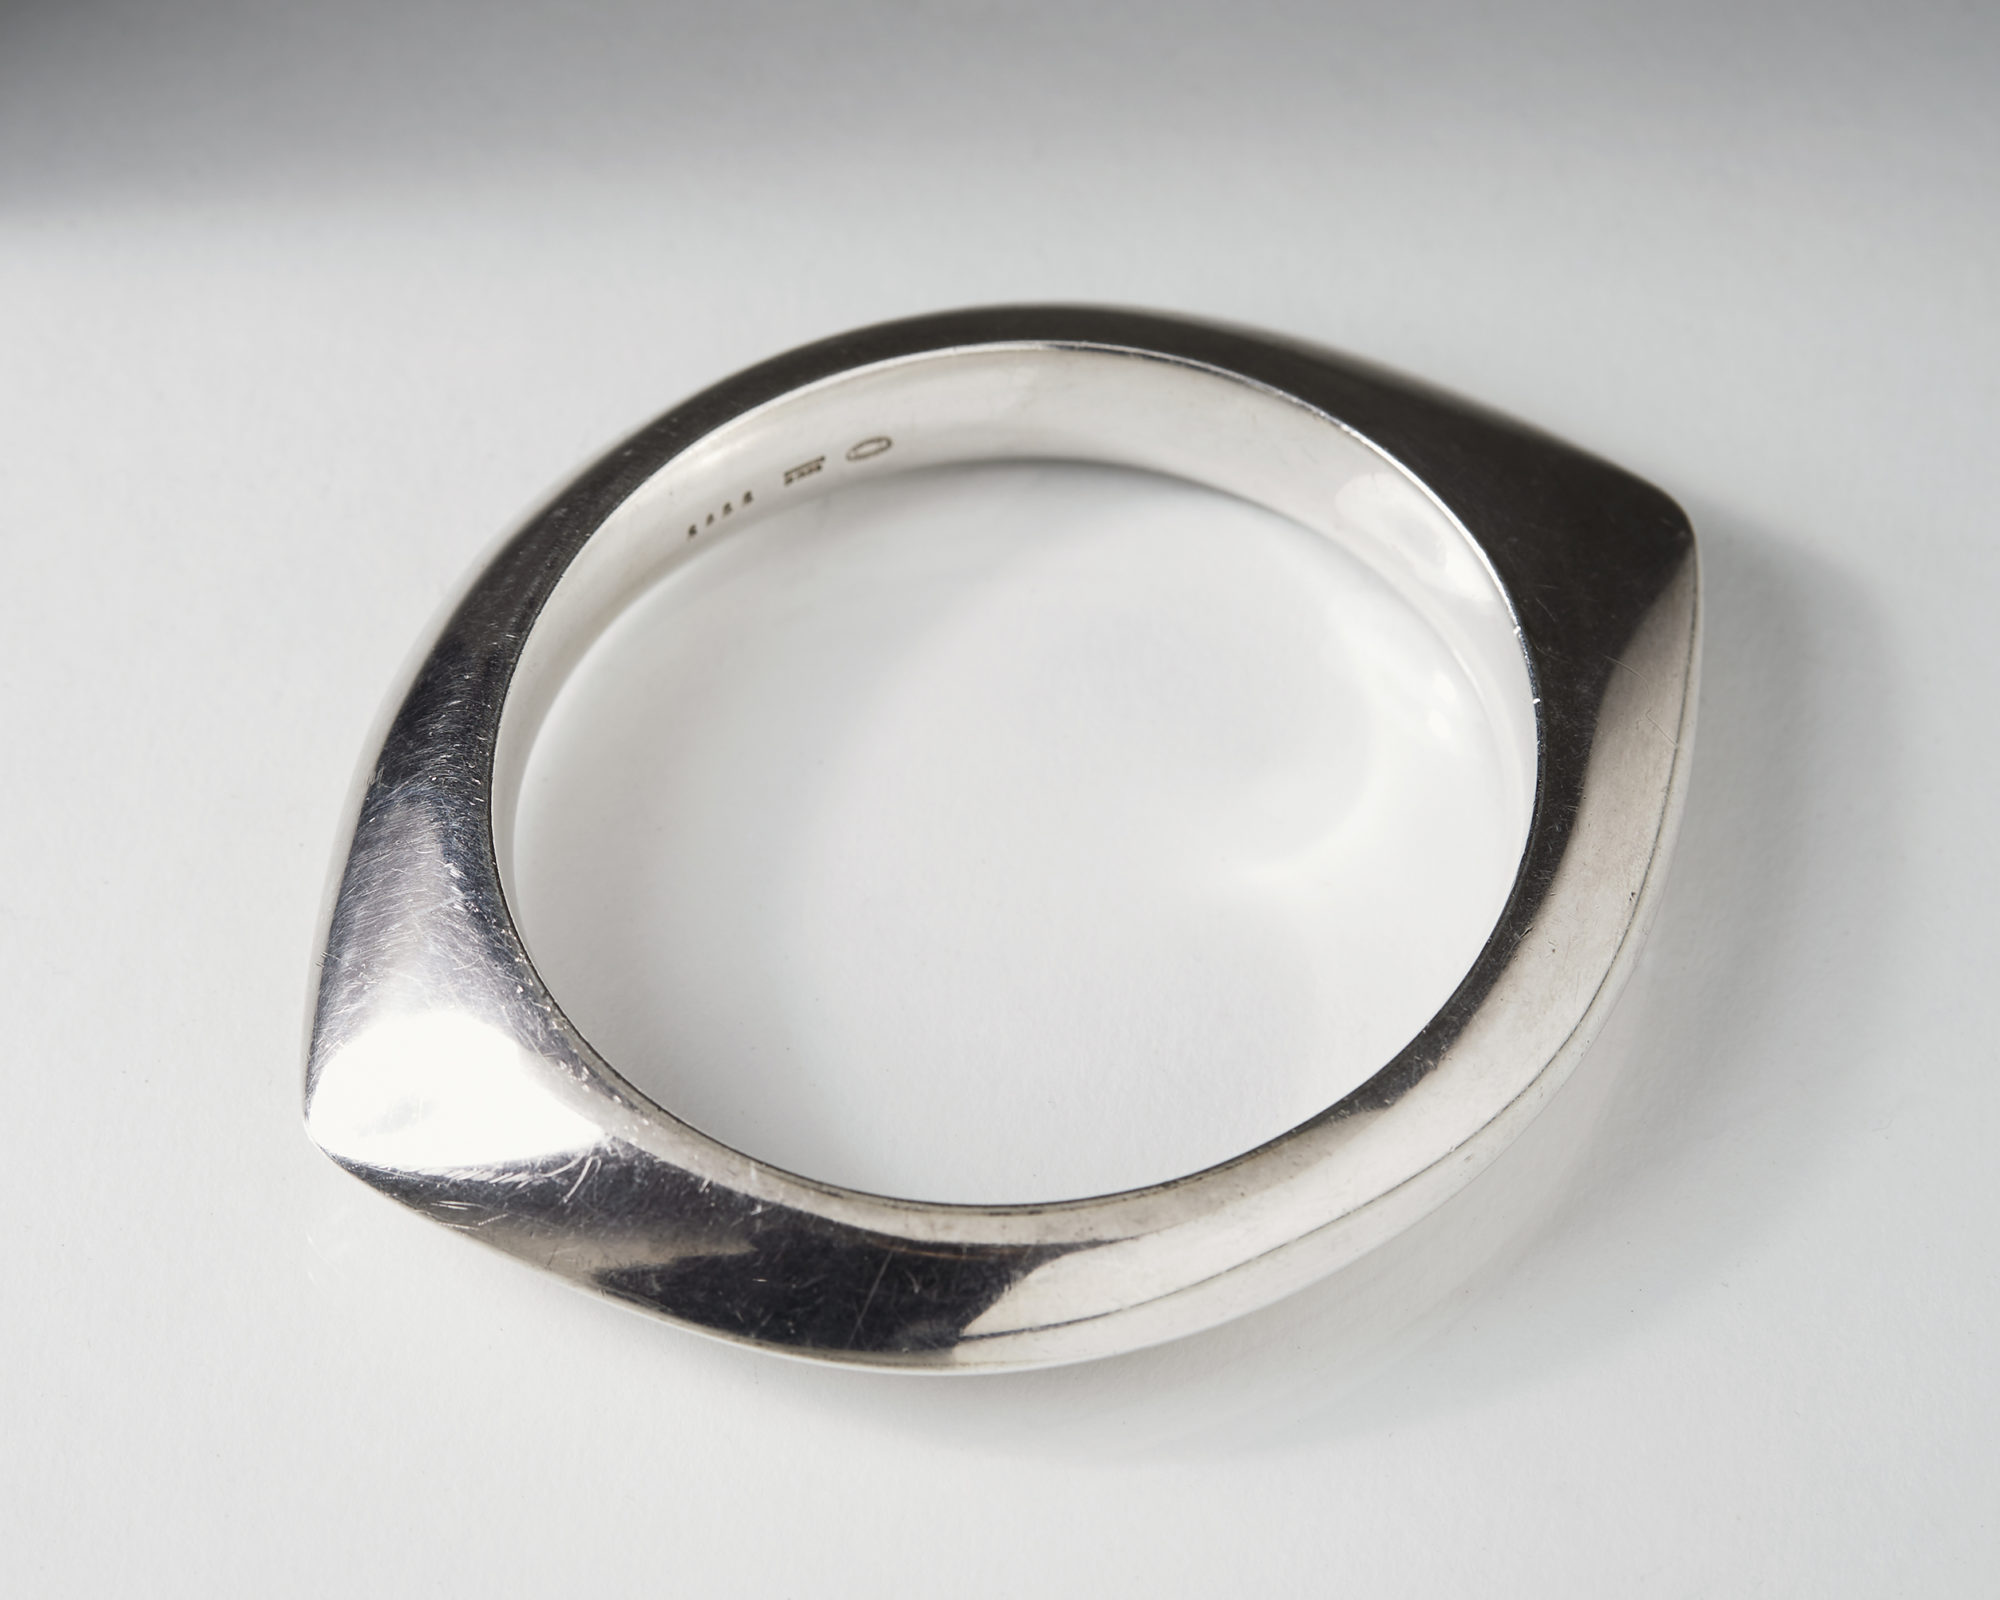 Silver bangle designed by Nanna Ditzel for Georg Jensen, — Modernity